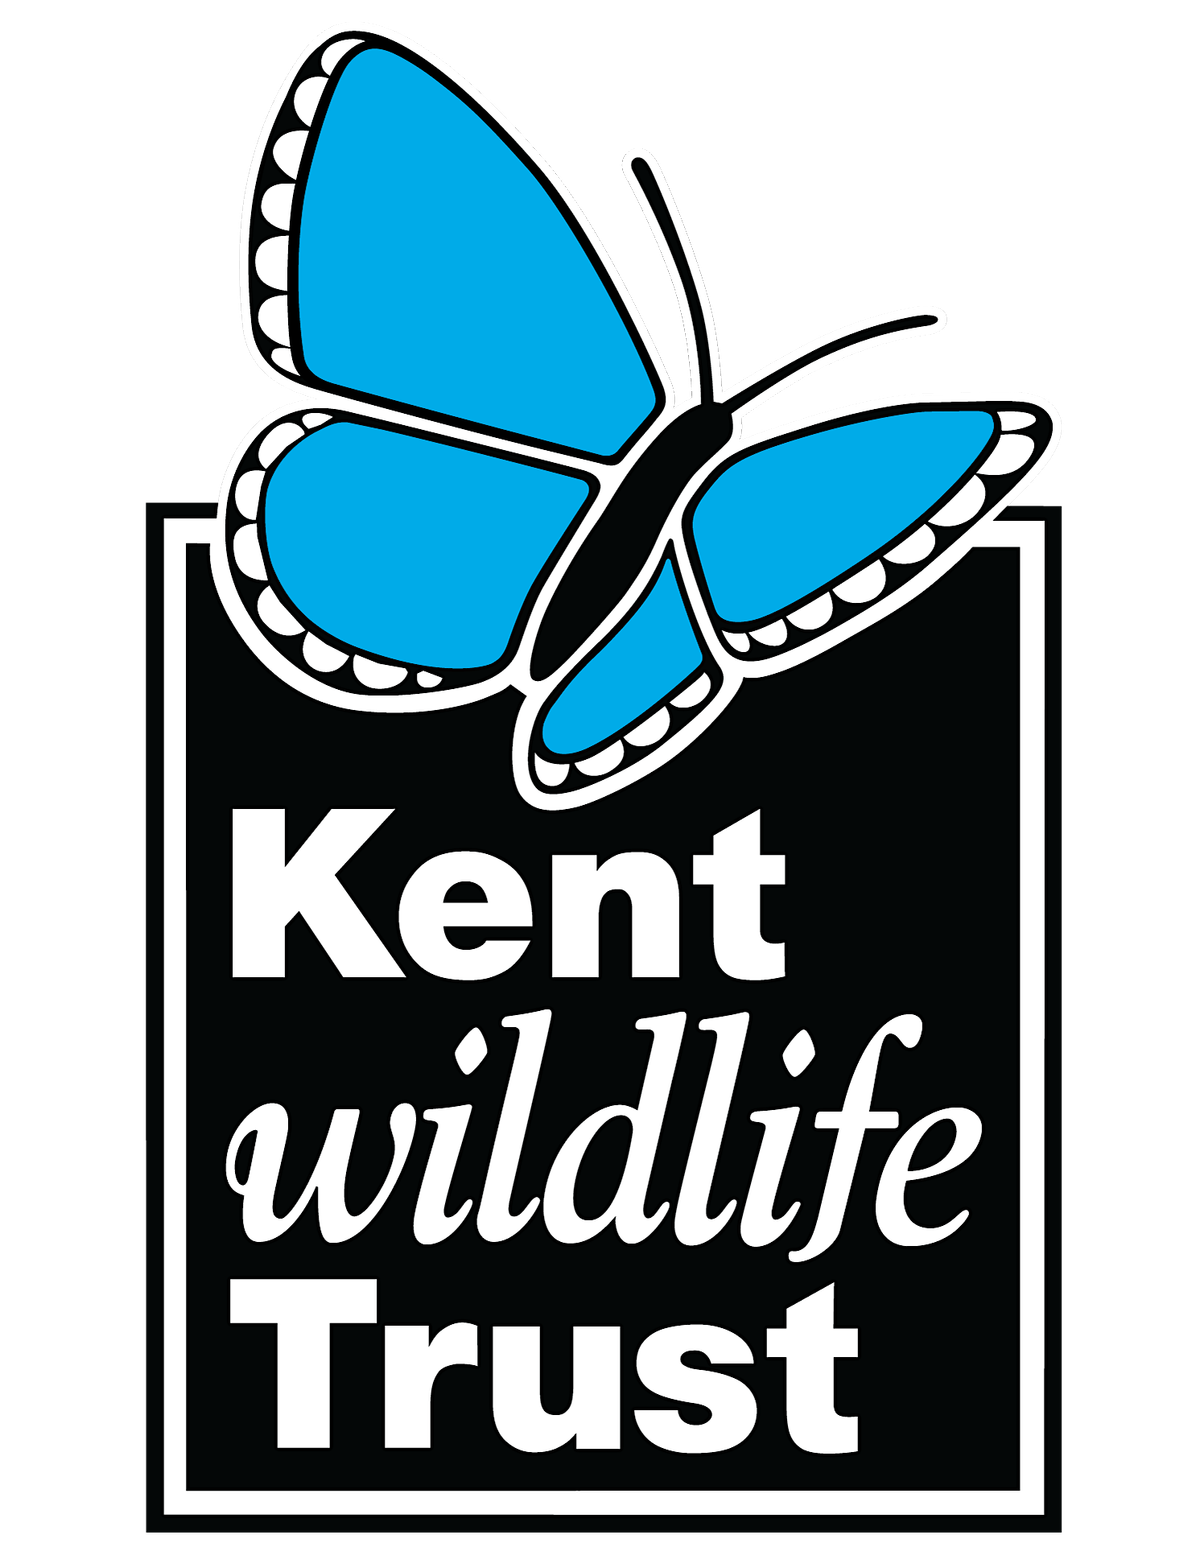 Kent Wildlife Trust Information Stall